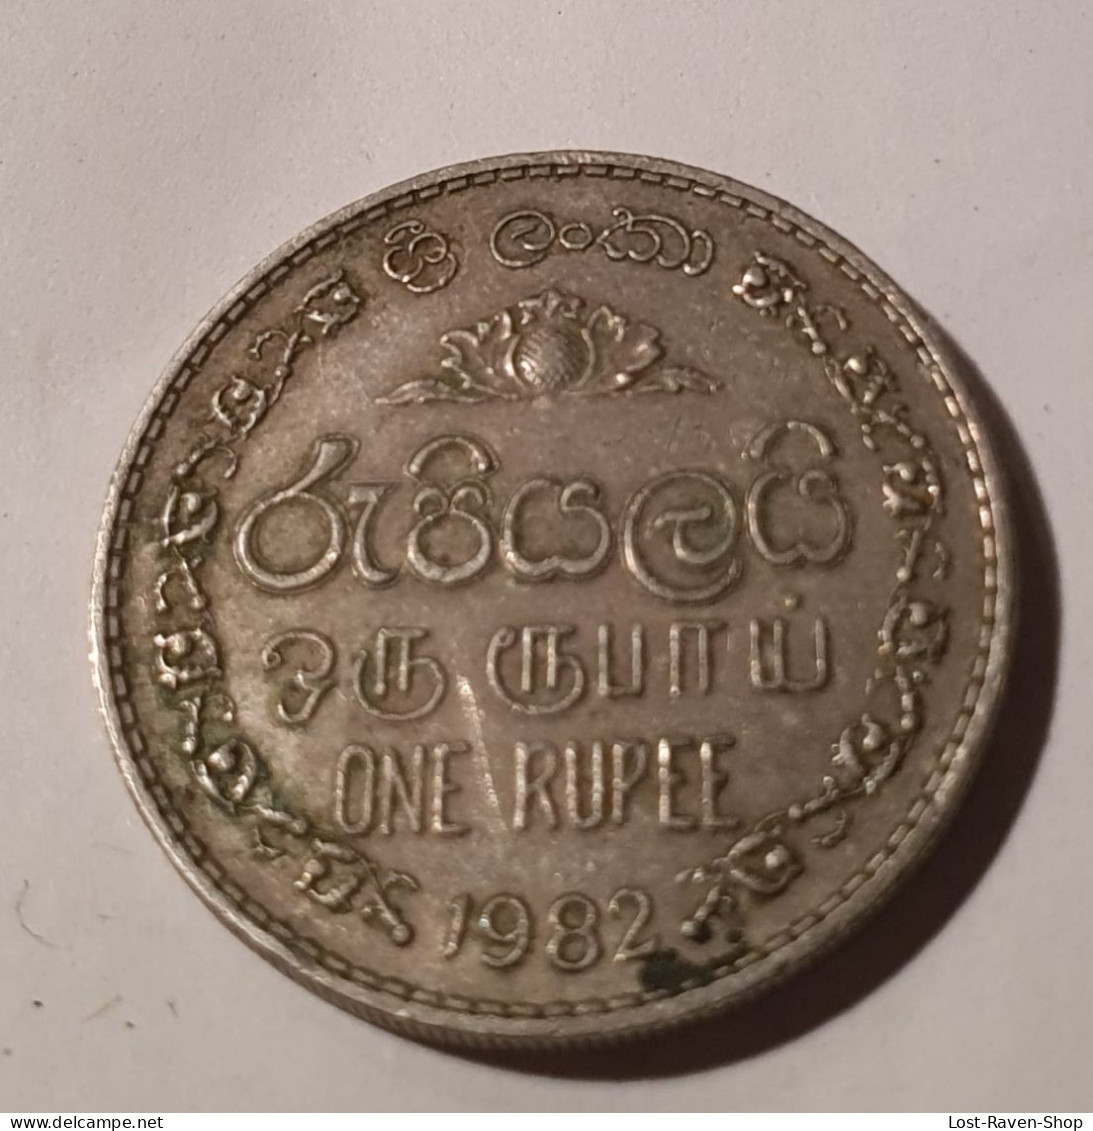 One Rupee - 1982 - Sri Lanka